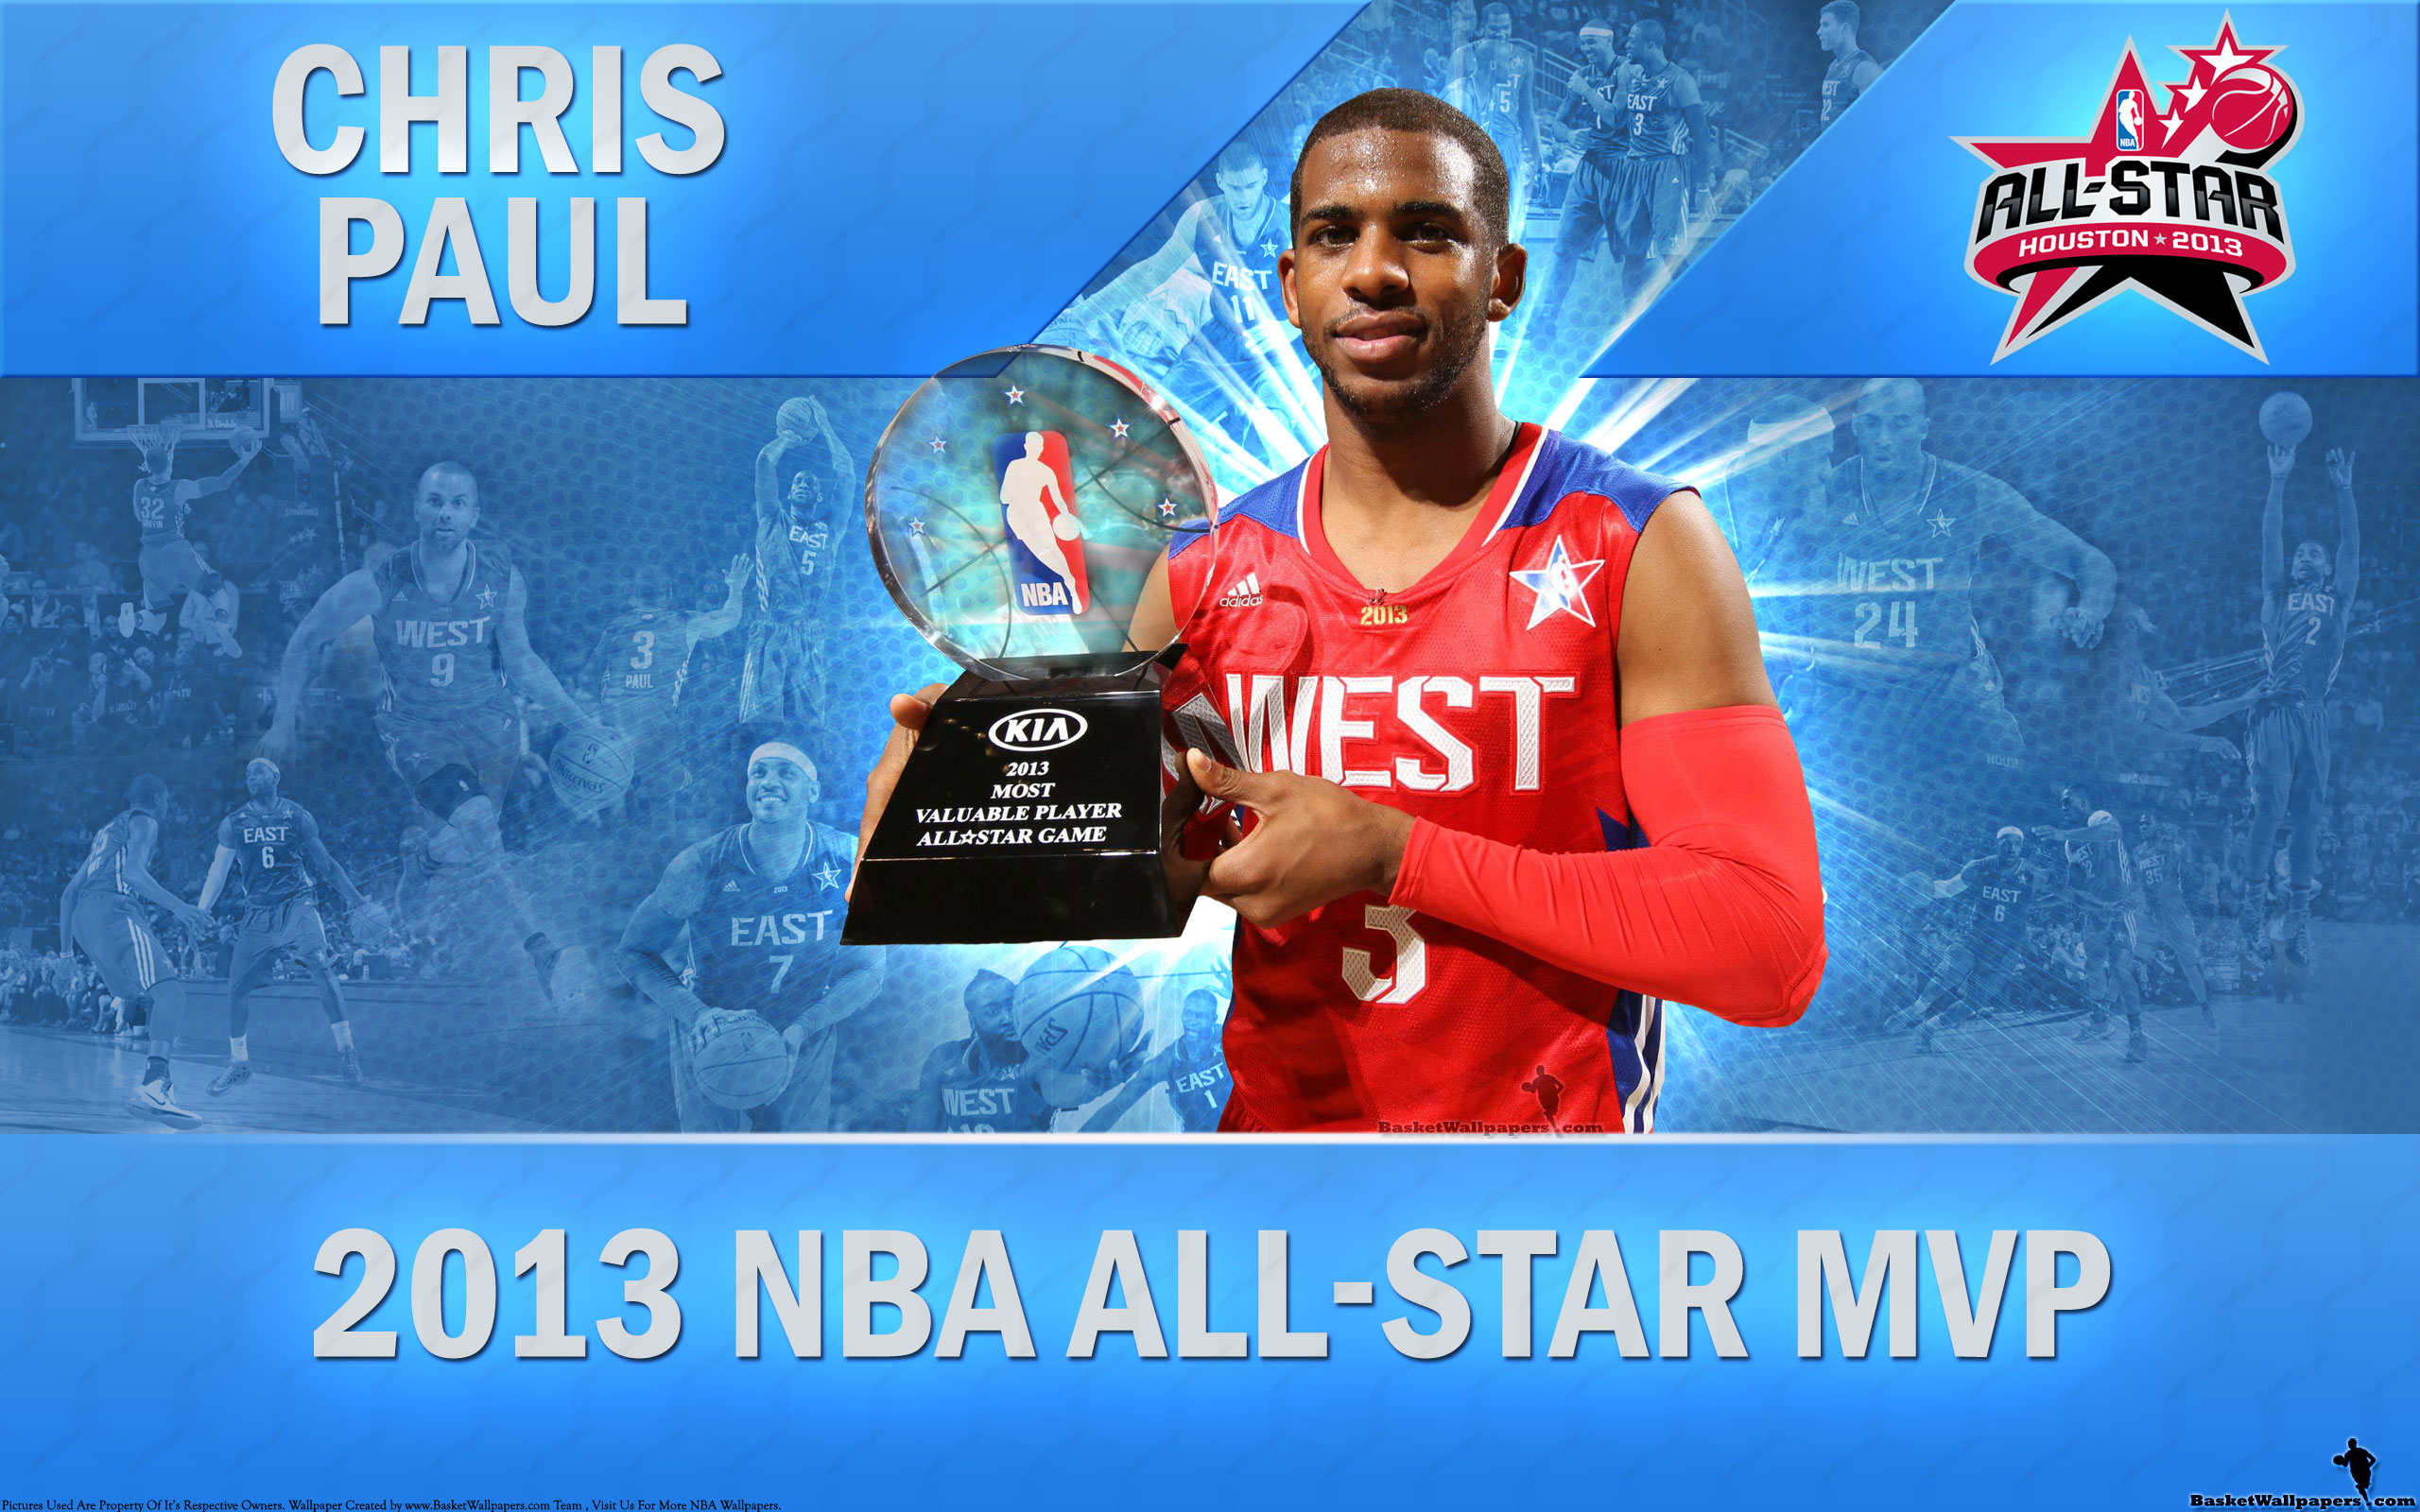 Chris Paul Background Clippers Wallpaper Winning